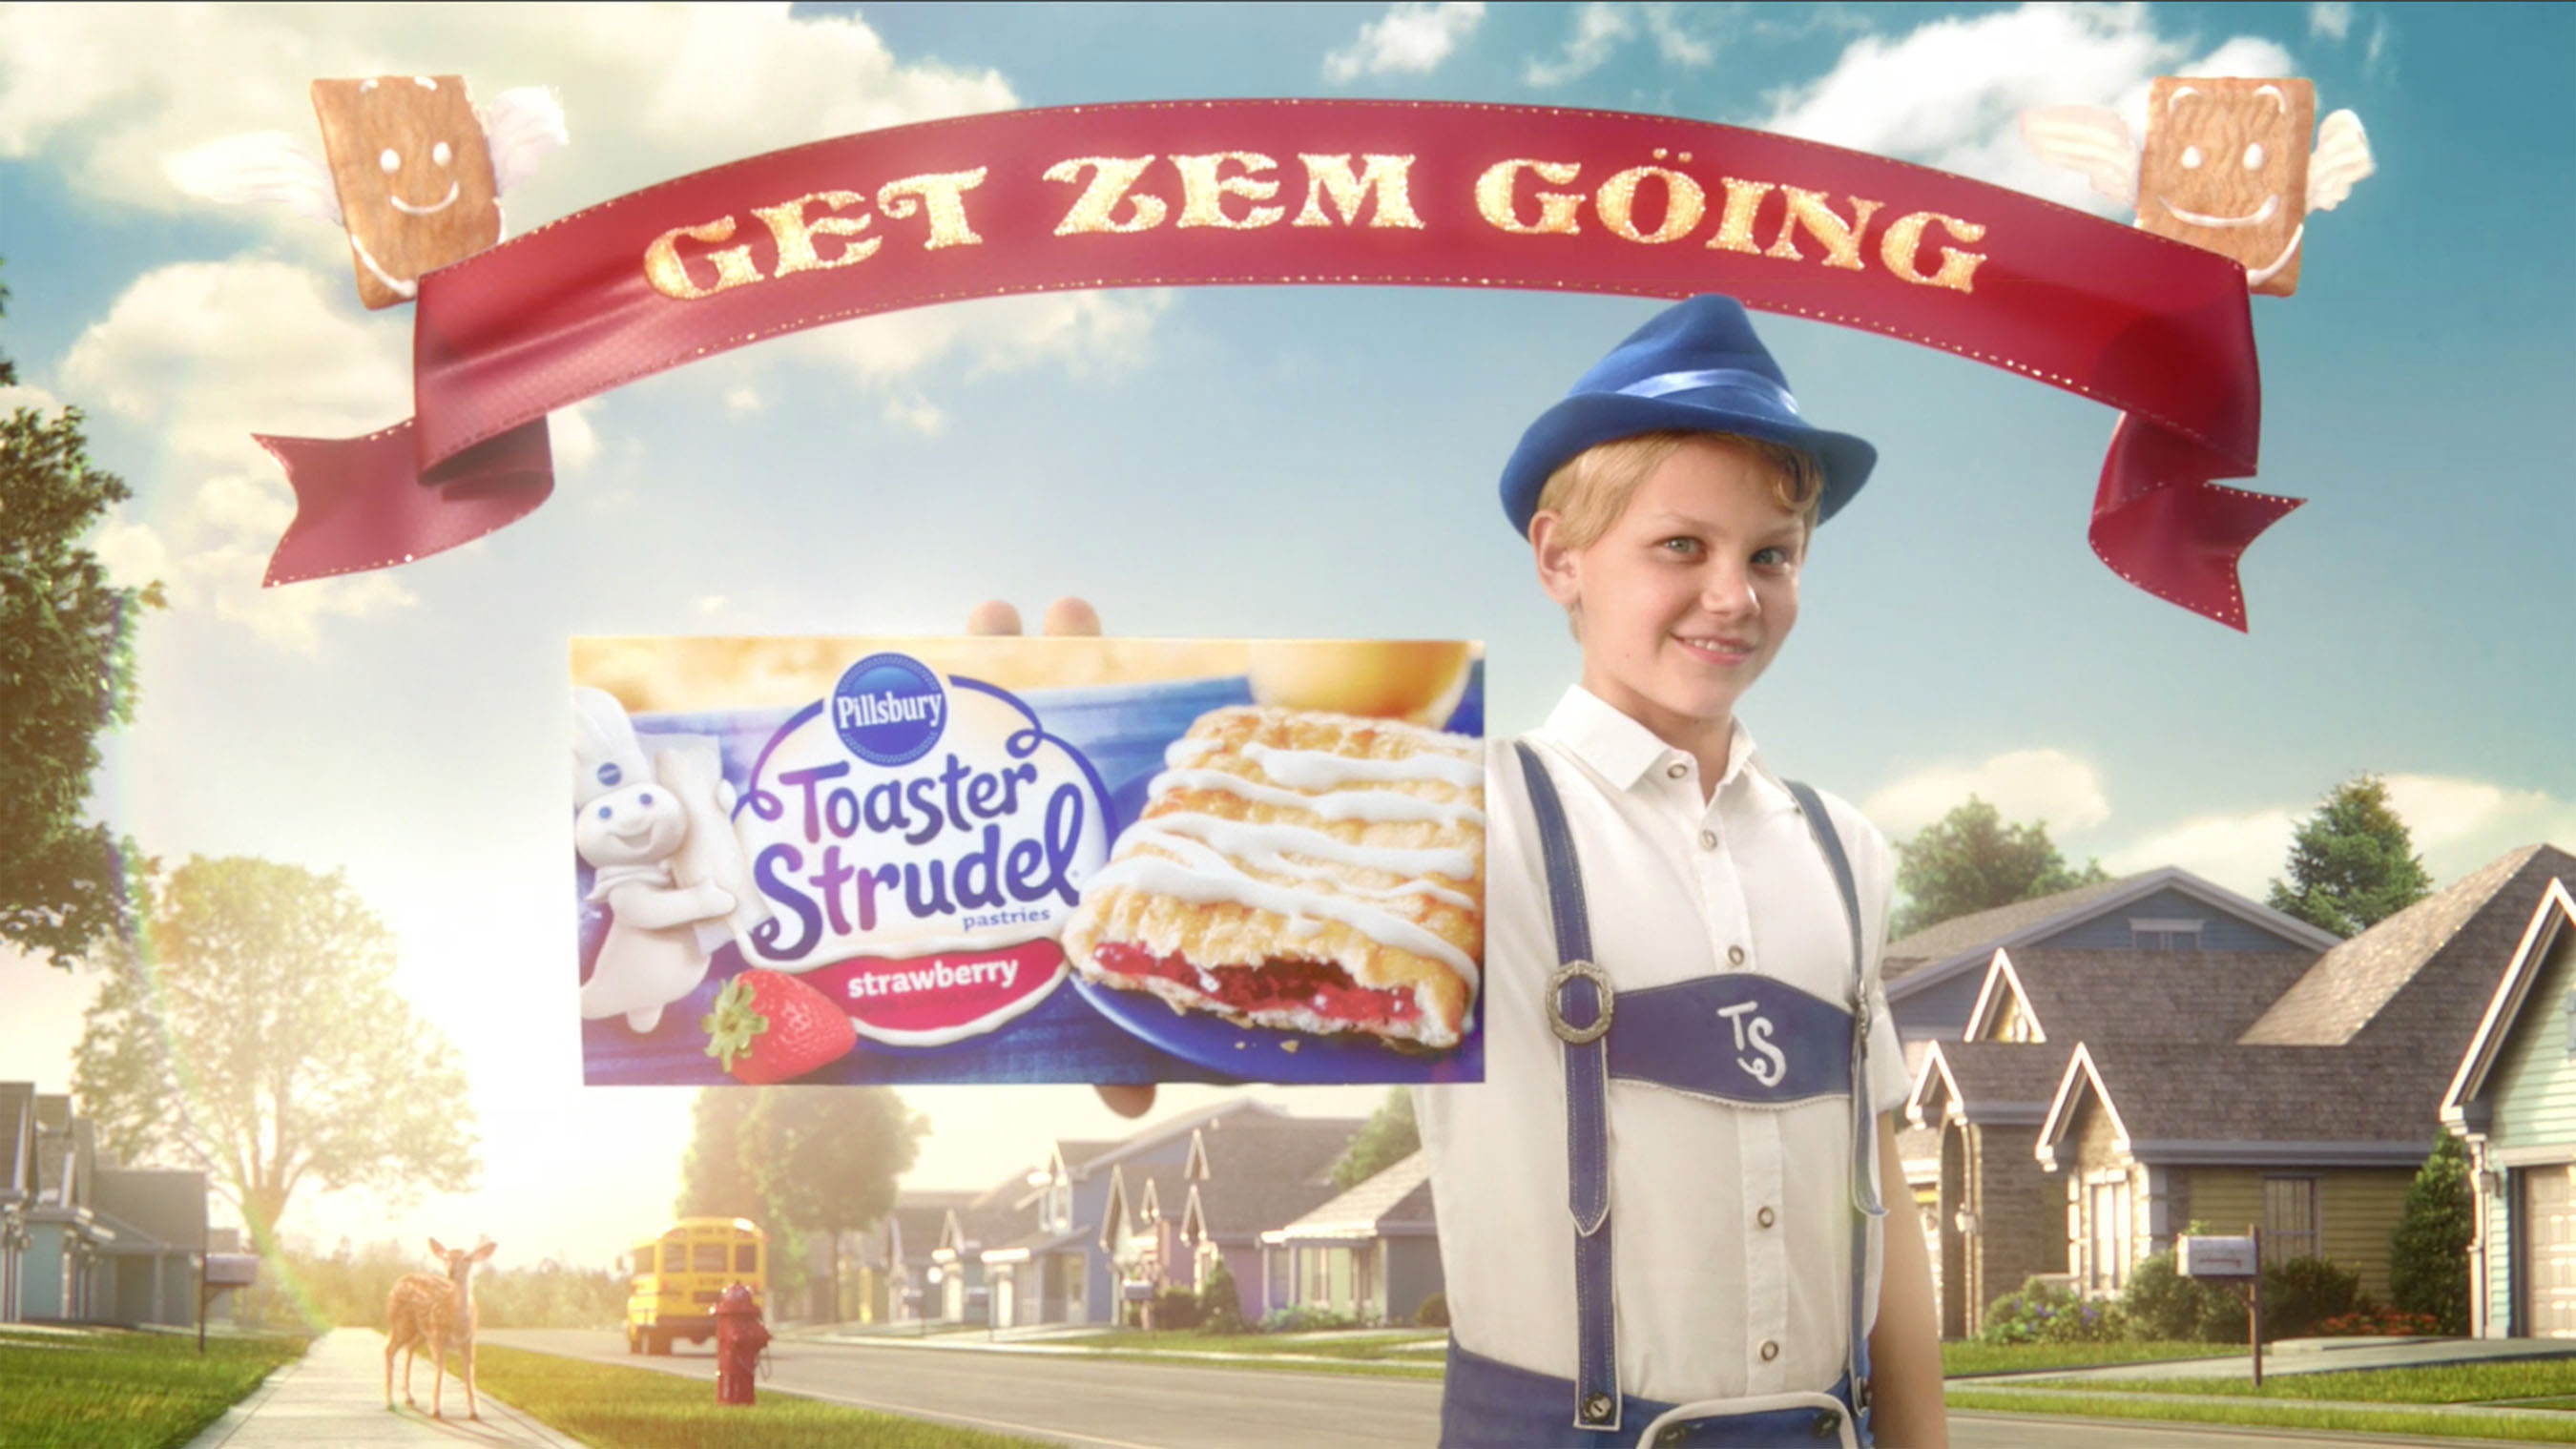 The new face of Pillsbury Toaster Strudel, Hans Strudel, helps "Get Zem Going!". (PRNewsFoto/Pillsbury Toaster Strudel) (PRNewsFoto/PILLSBURY TOASTER STRUDEL)